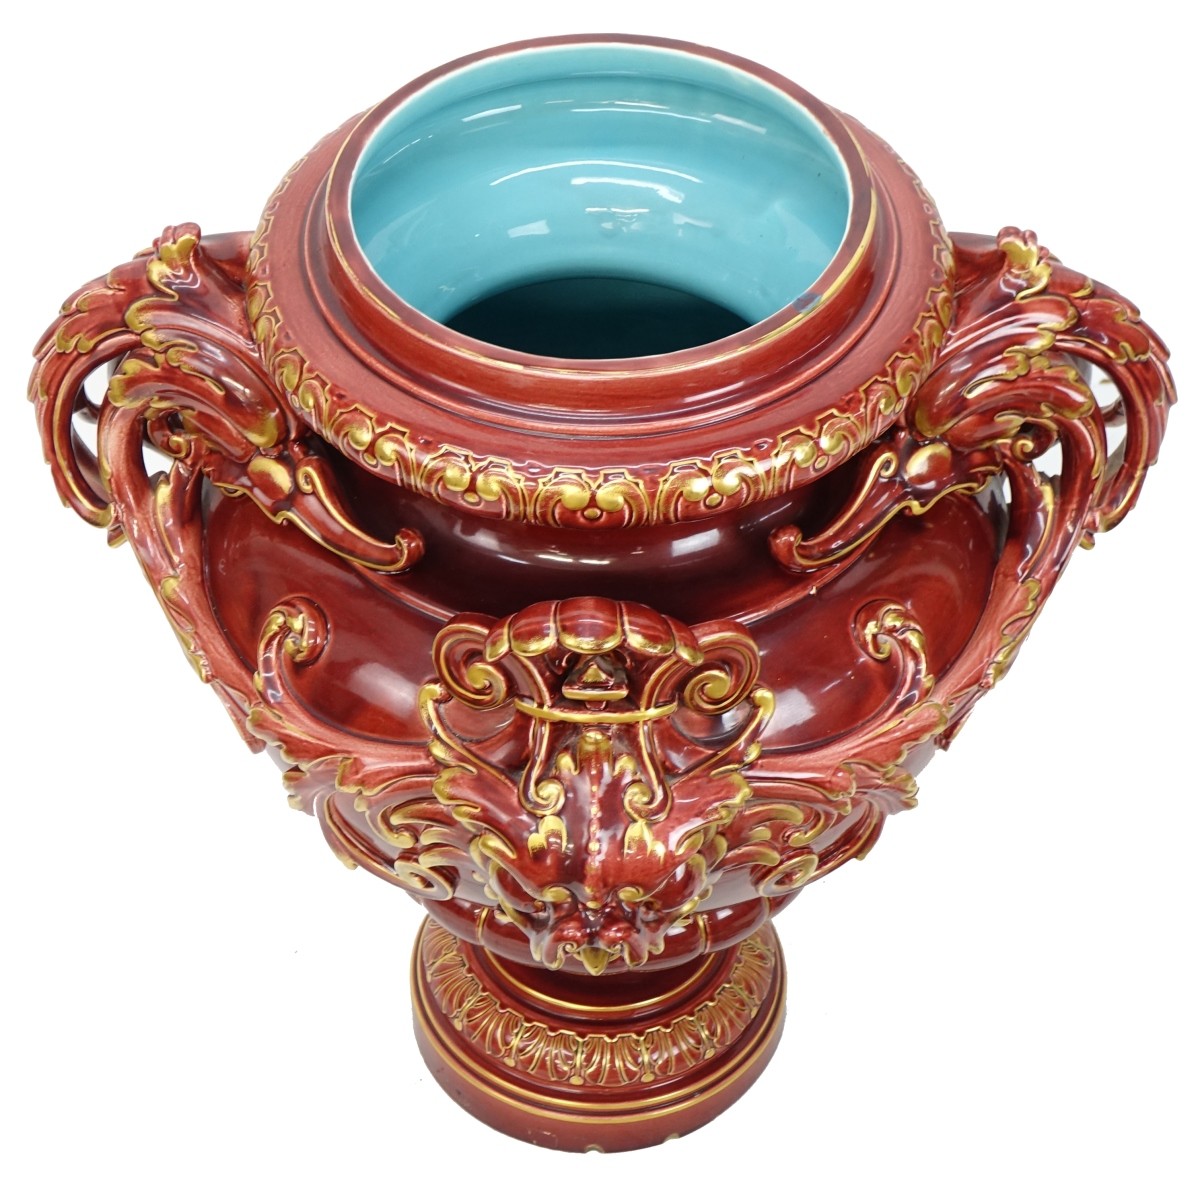 Sarreguemines Majolica Pottery Urn